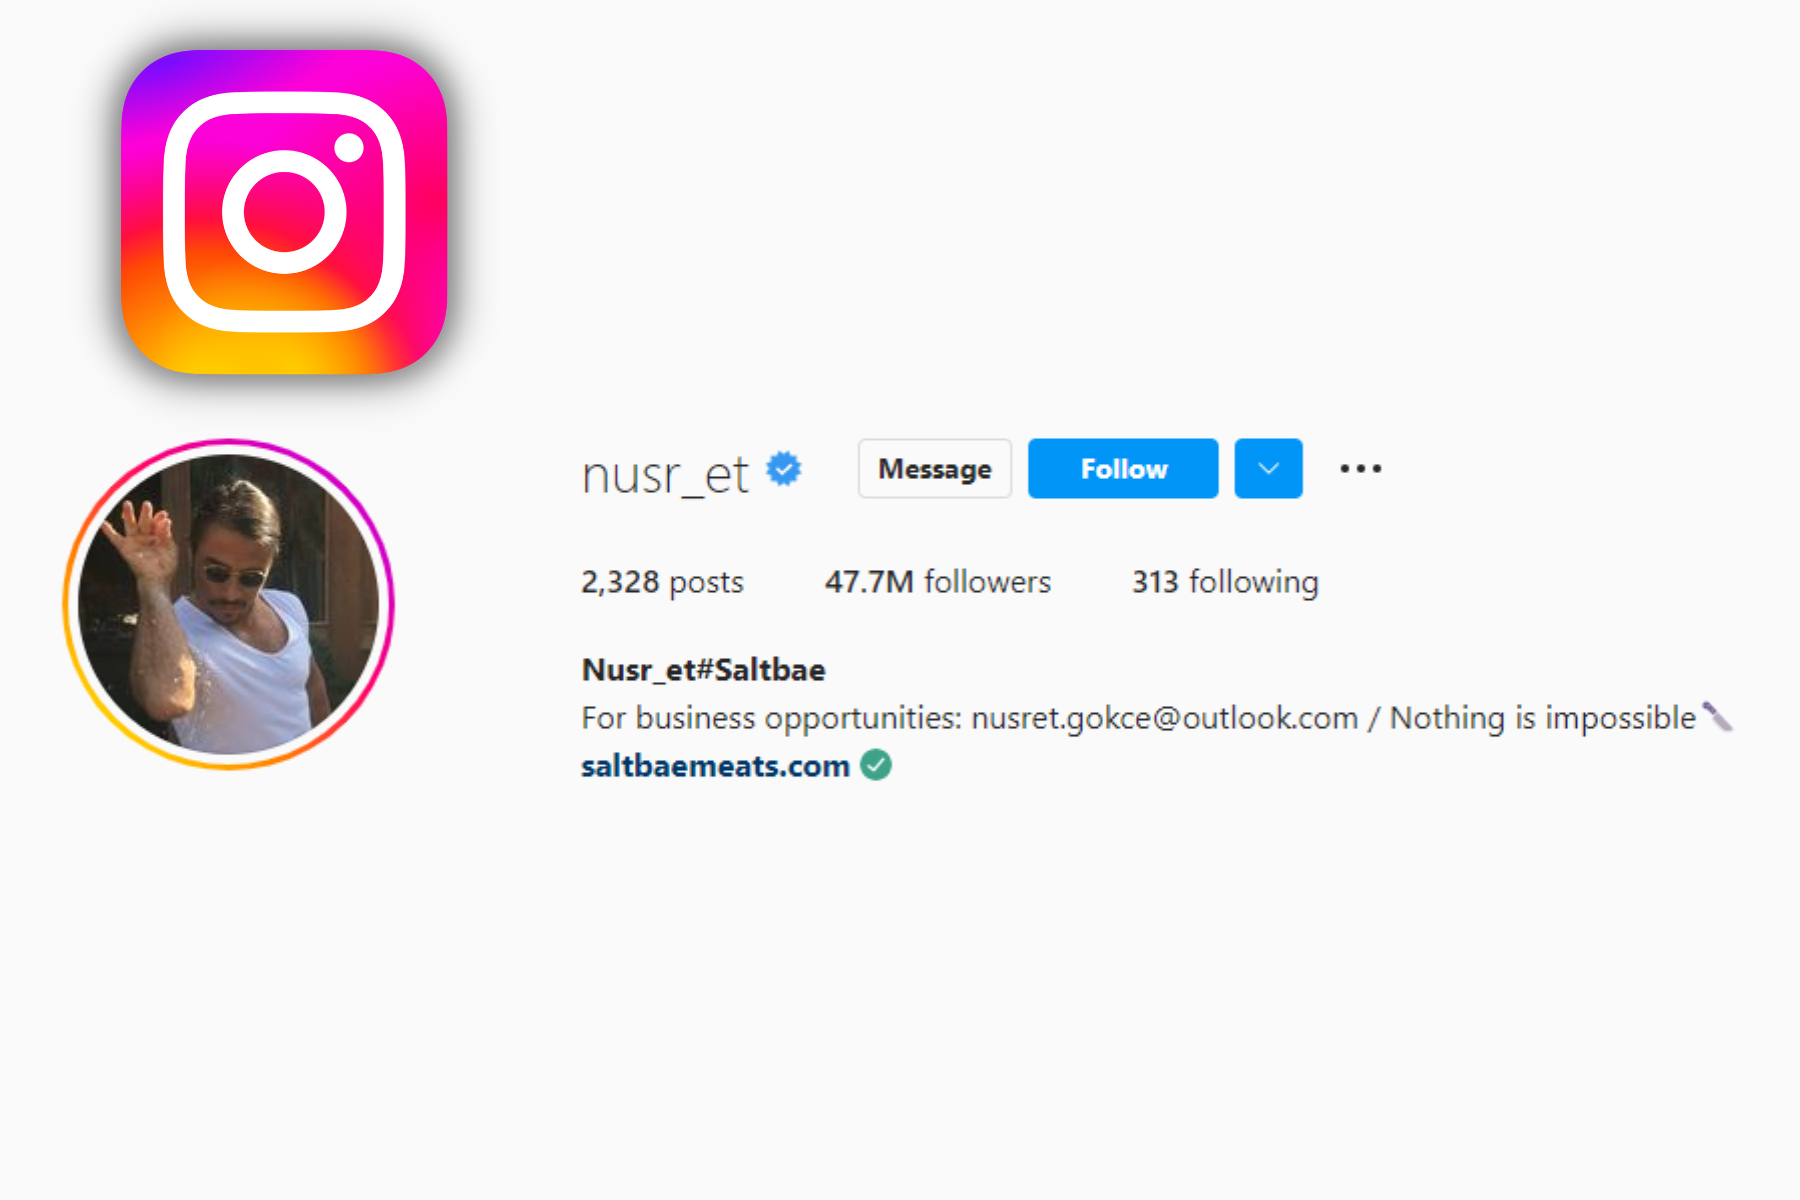 Nusret Gökçe's Instagram account with 47.7 million followers